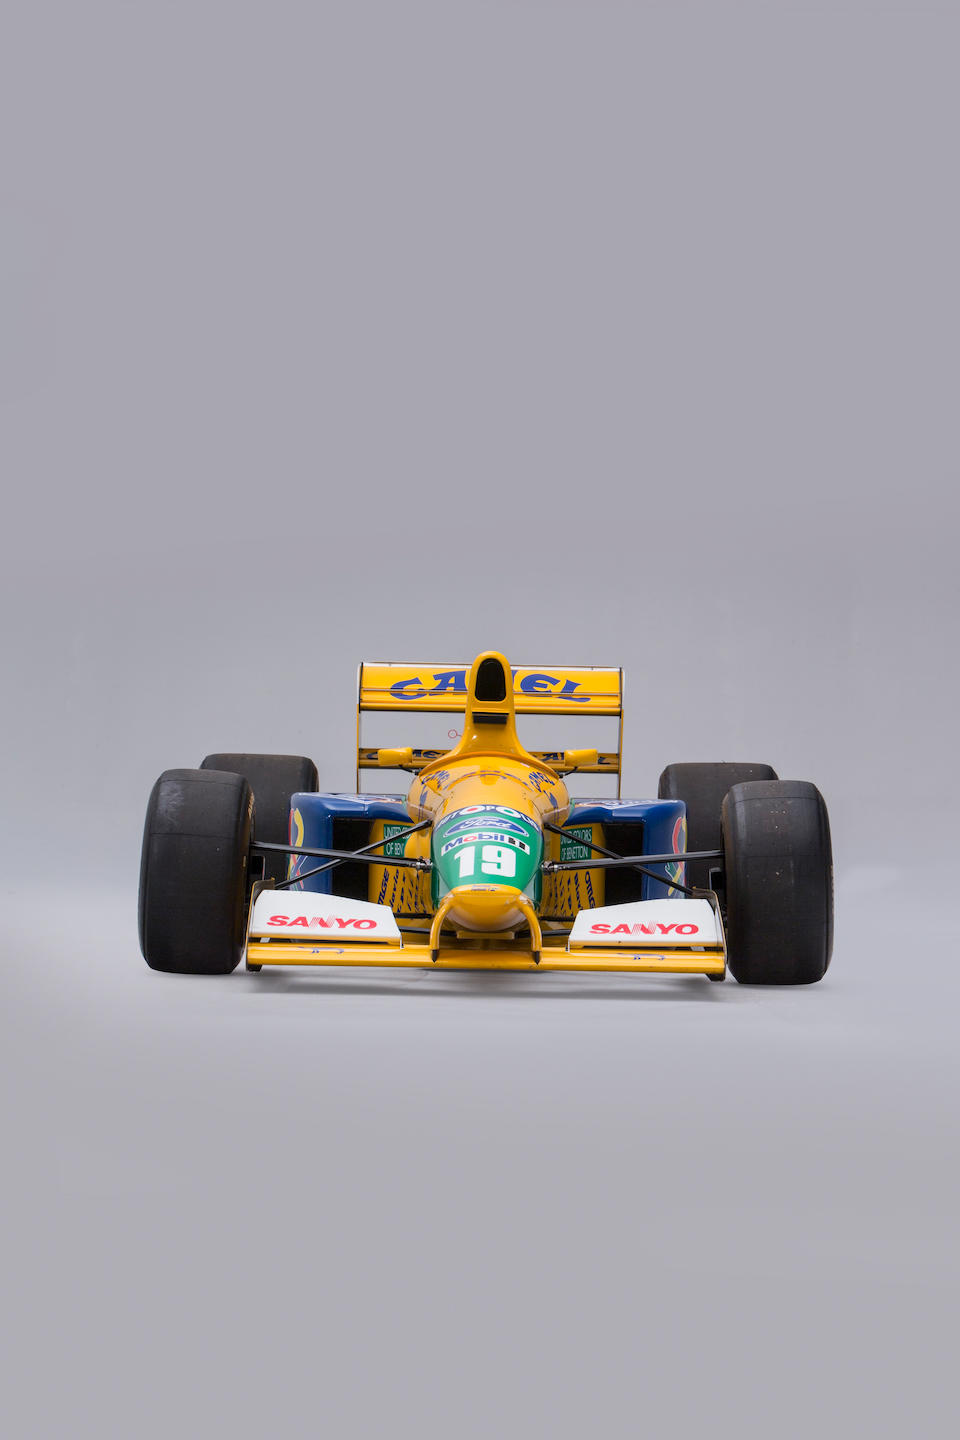 The Ex-Michael Schumacher, Nelson Piquet, Martin Brundle,1991-1992 Benetton-Ford B191/191B Formula 1 Racing Single-Seater  Chassis no. B191B-06